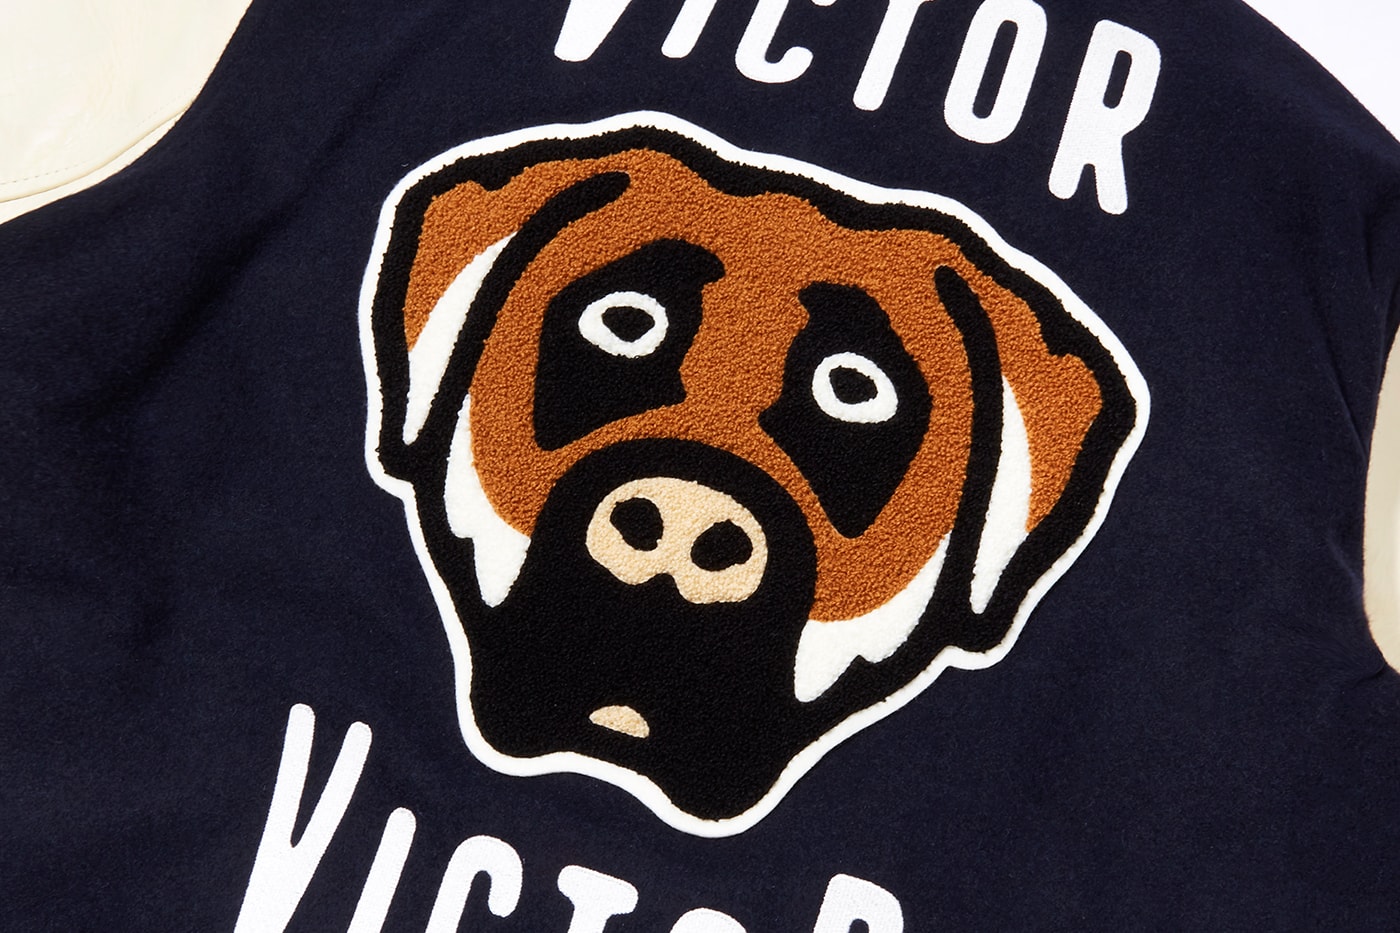 NIGO Victor Victor Worldwide Collection Release Info Steven Victor Jacket Socks Rug